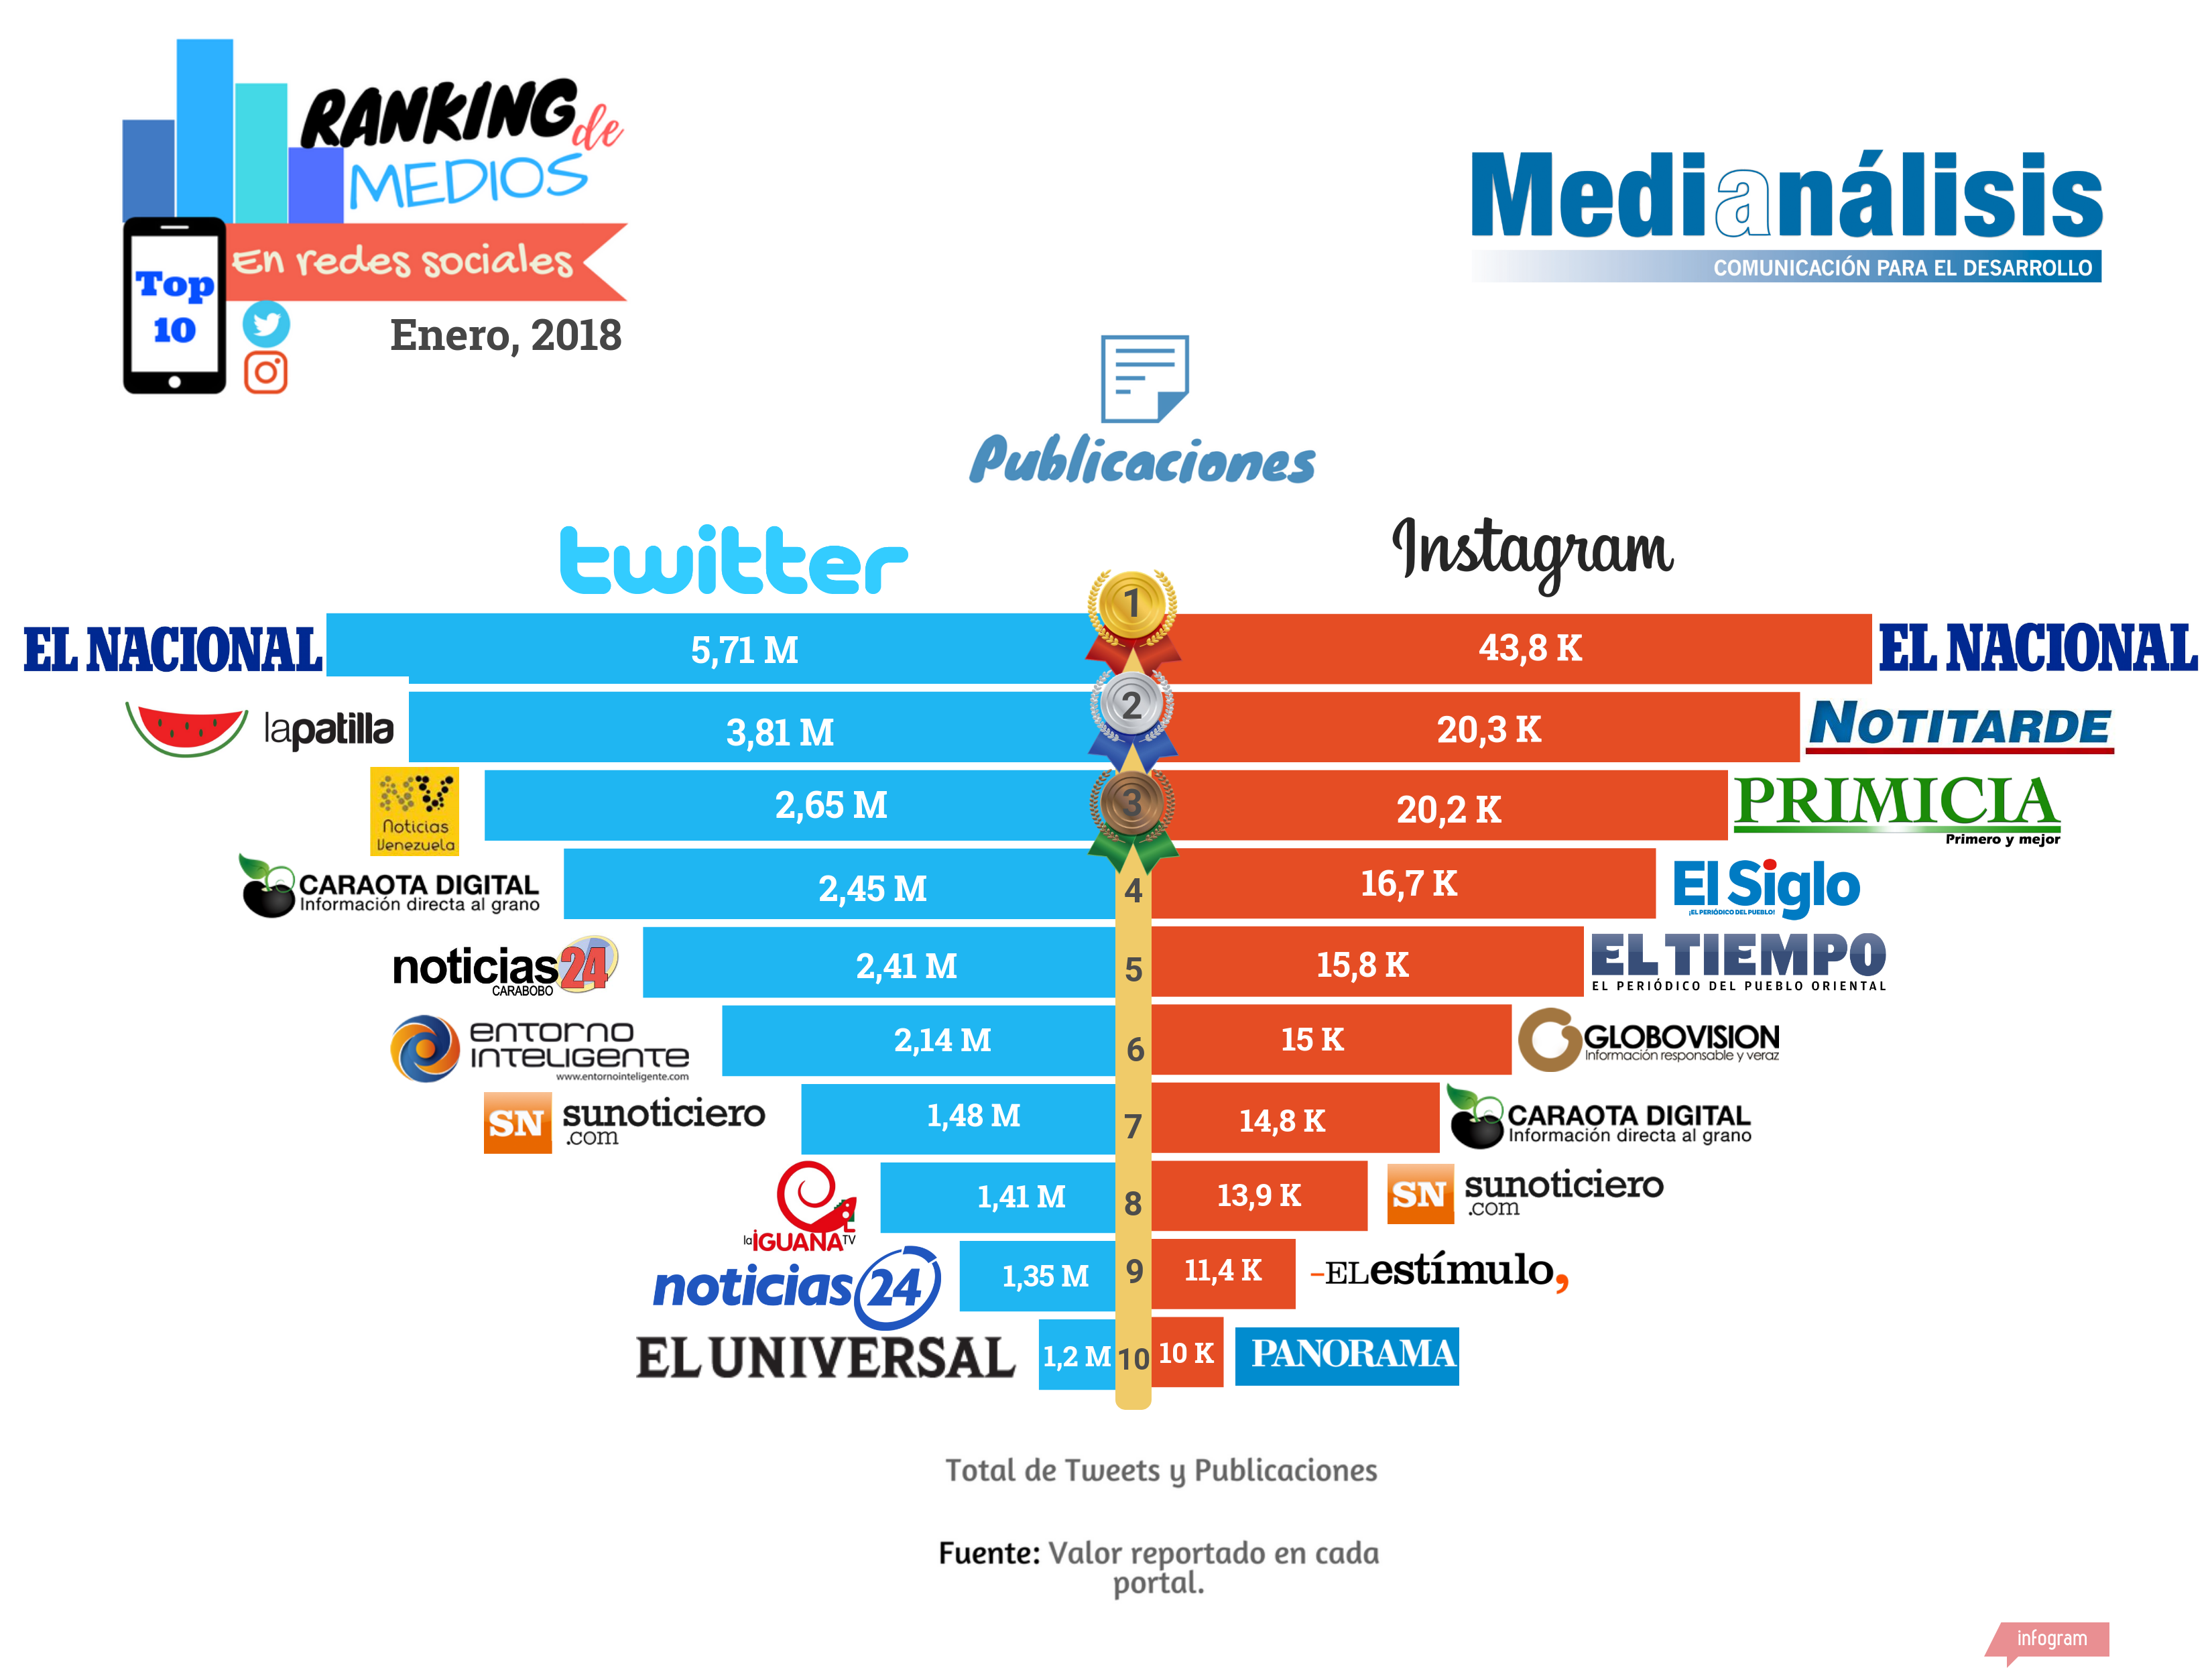 Las Redes Sociales Mas Populares En Mexico Infografia Infographic Images 4875